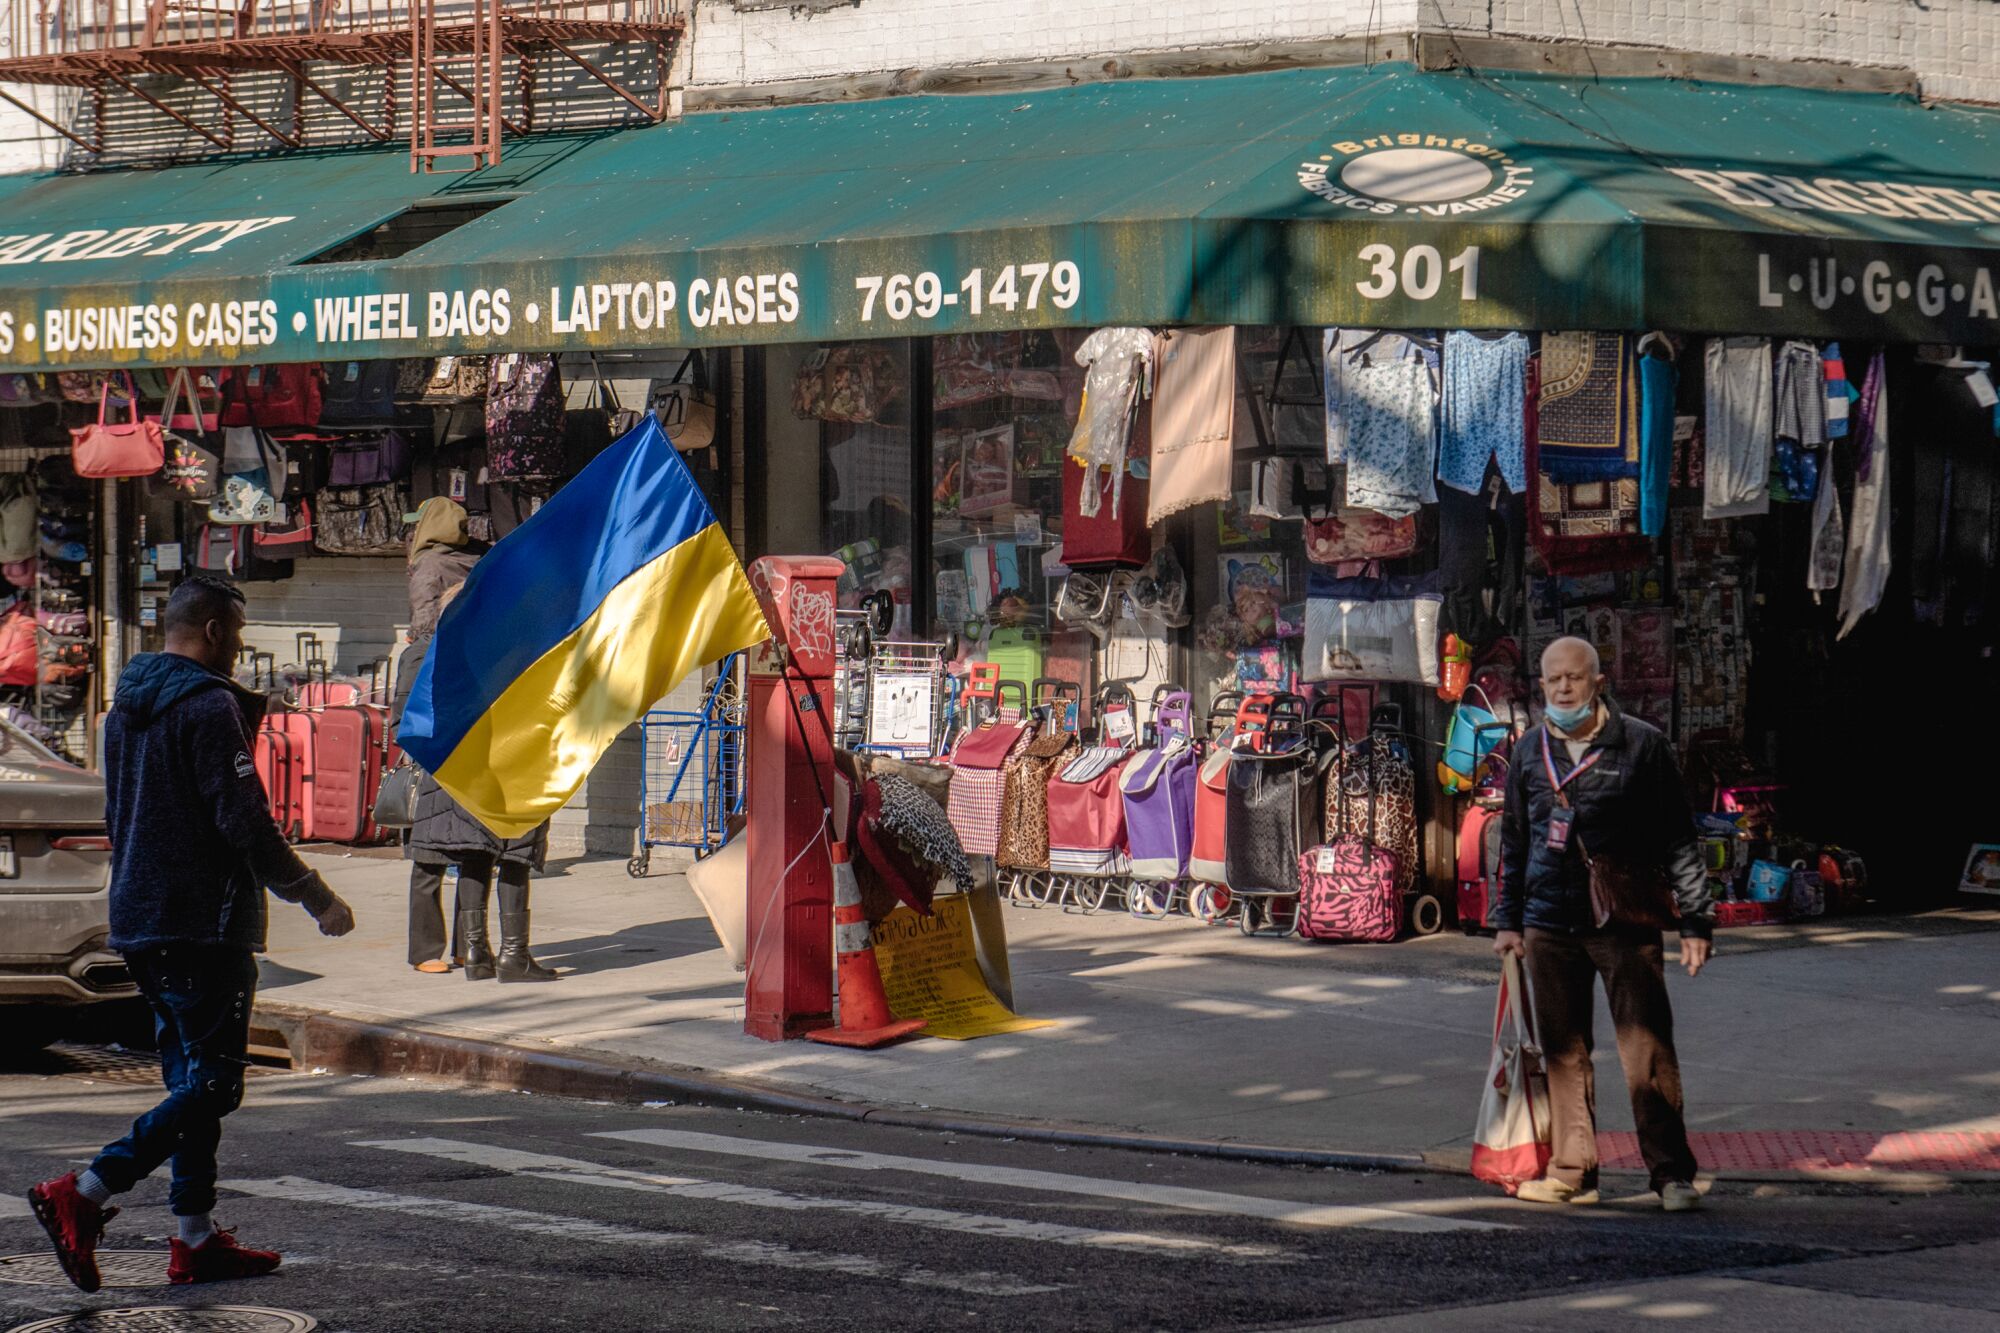 On a Brooklyn street corner, a large Ukrainian flag is displayed.